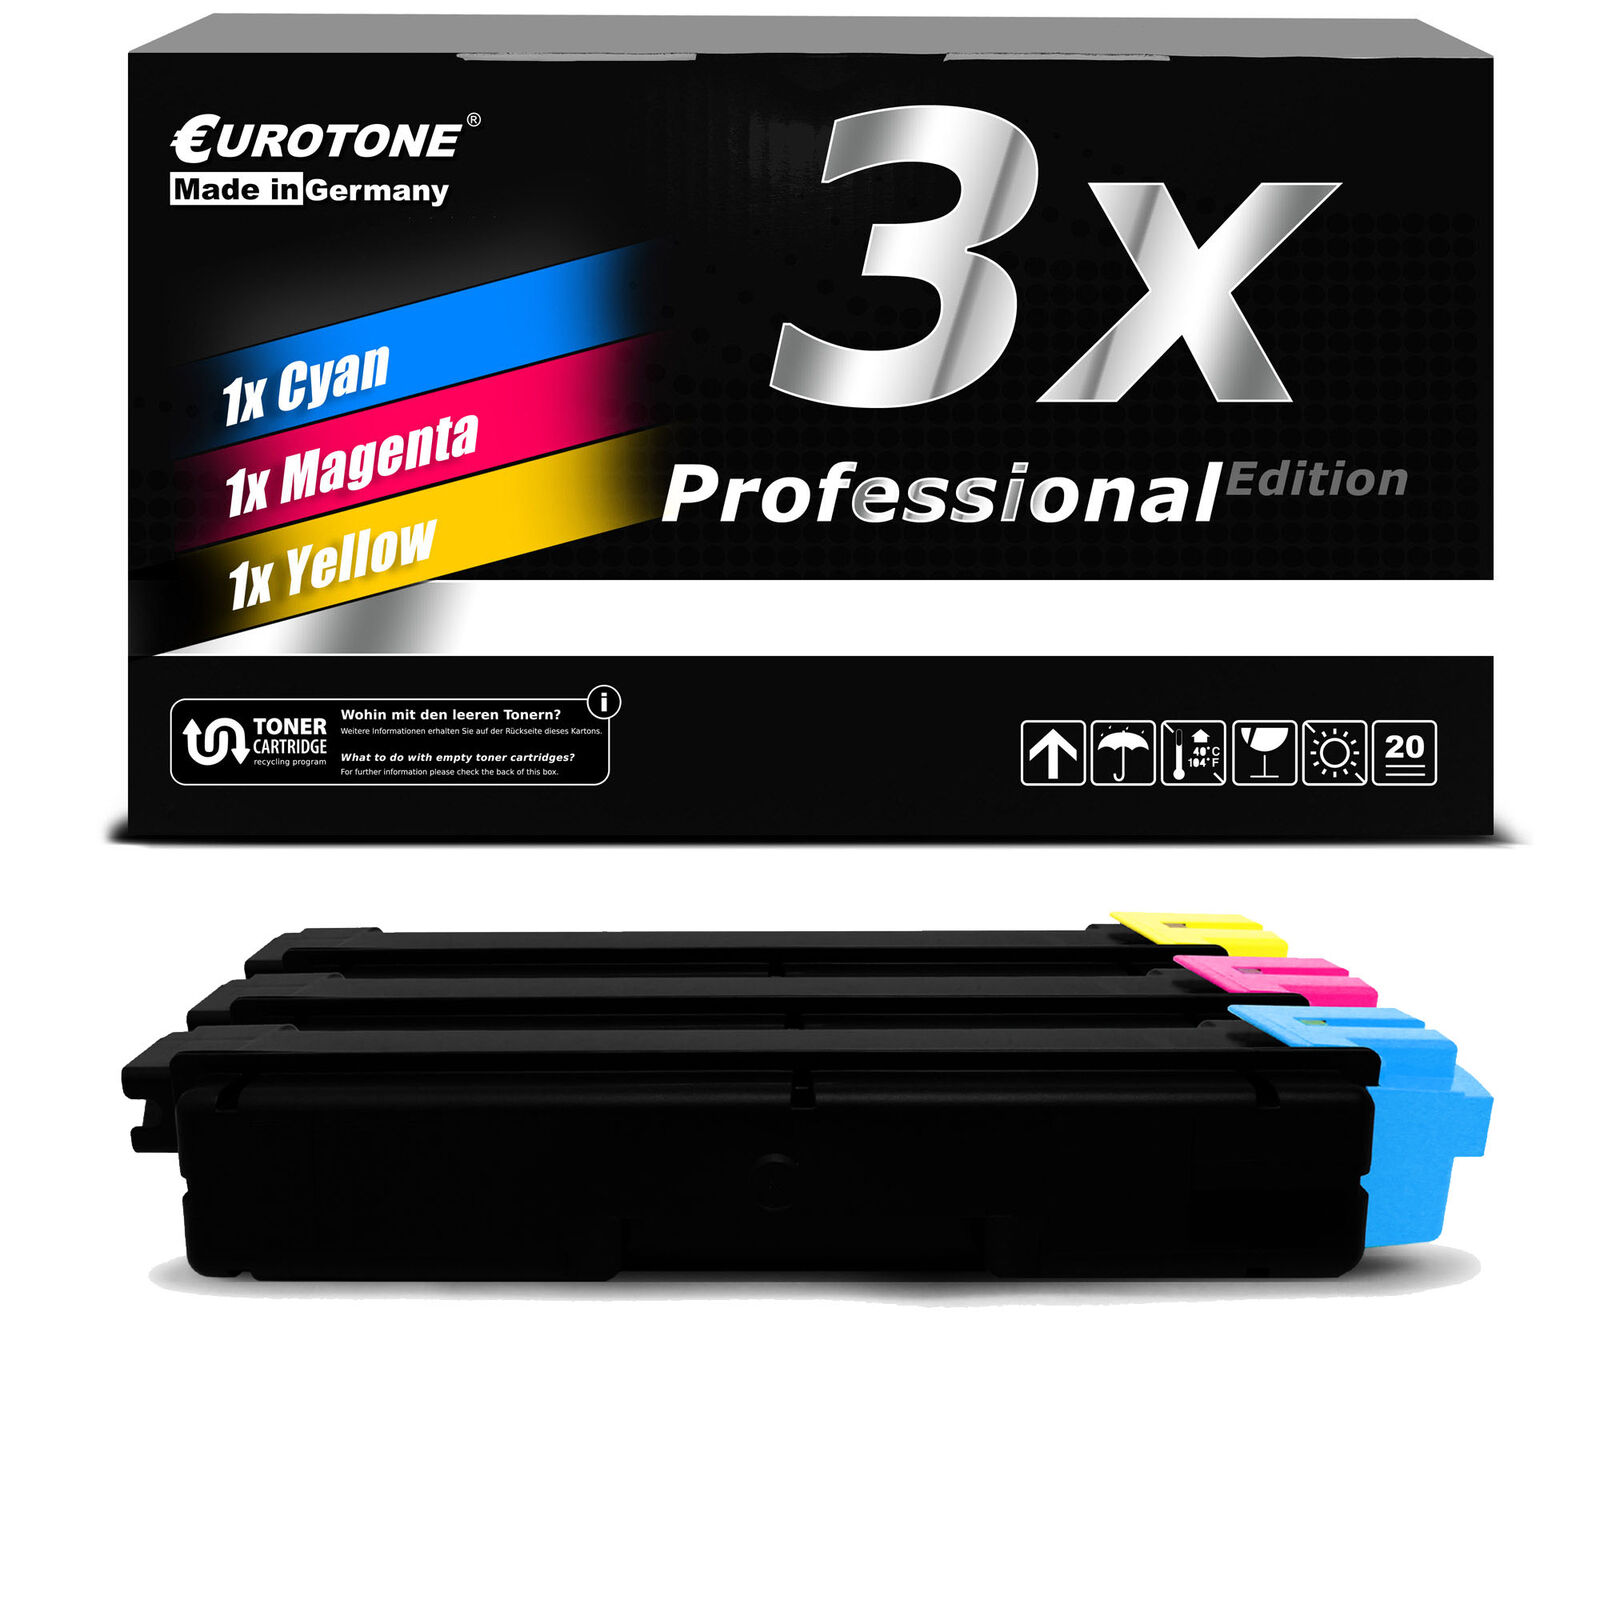 3x Pro Cartridge for Kyocera Ecosys P7240cdn Color Set